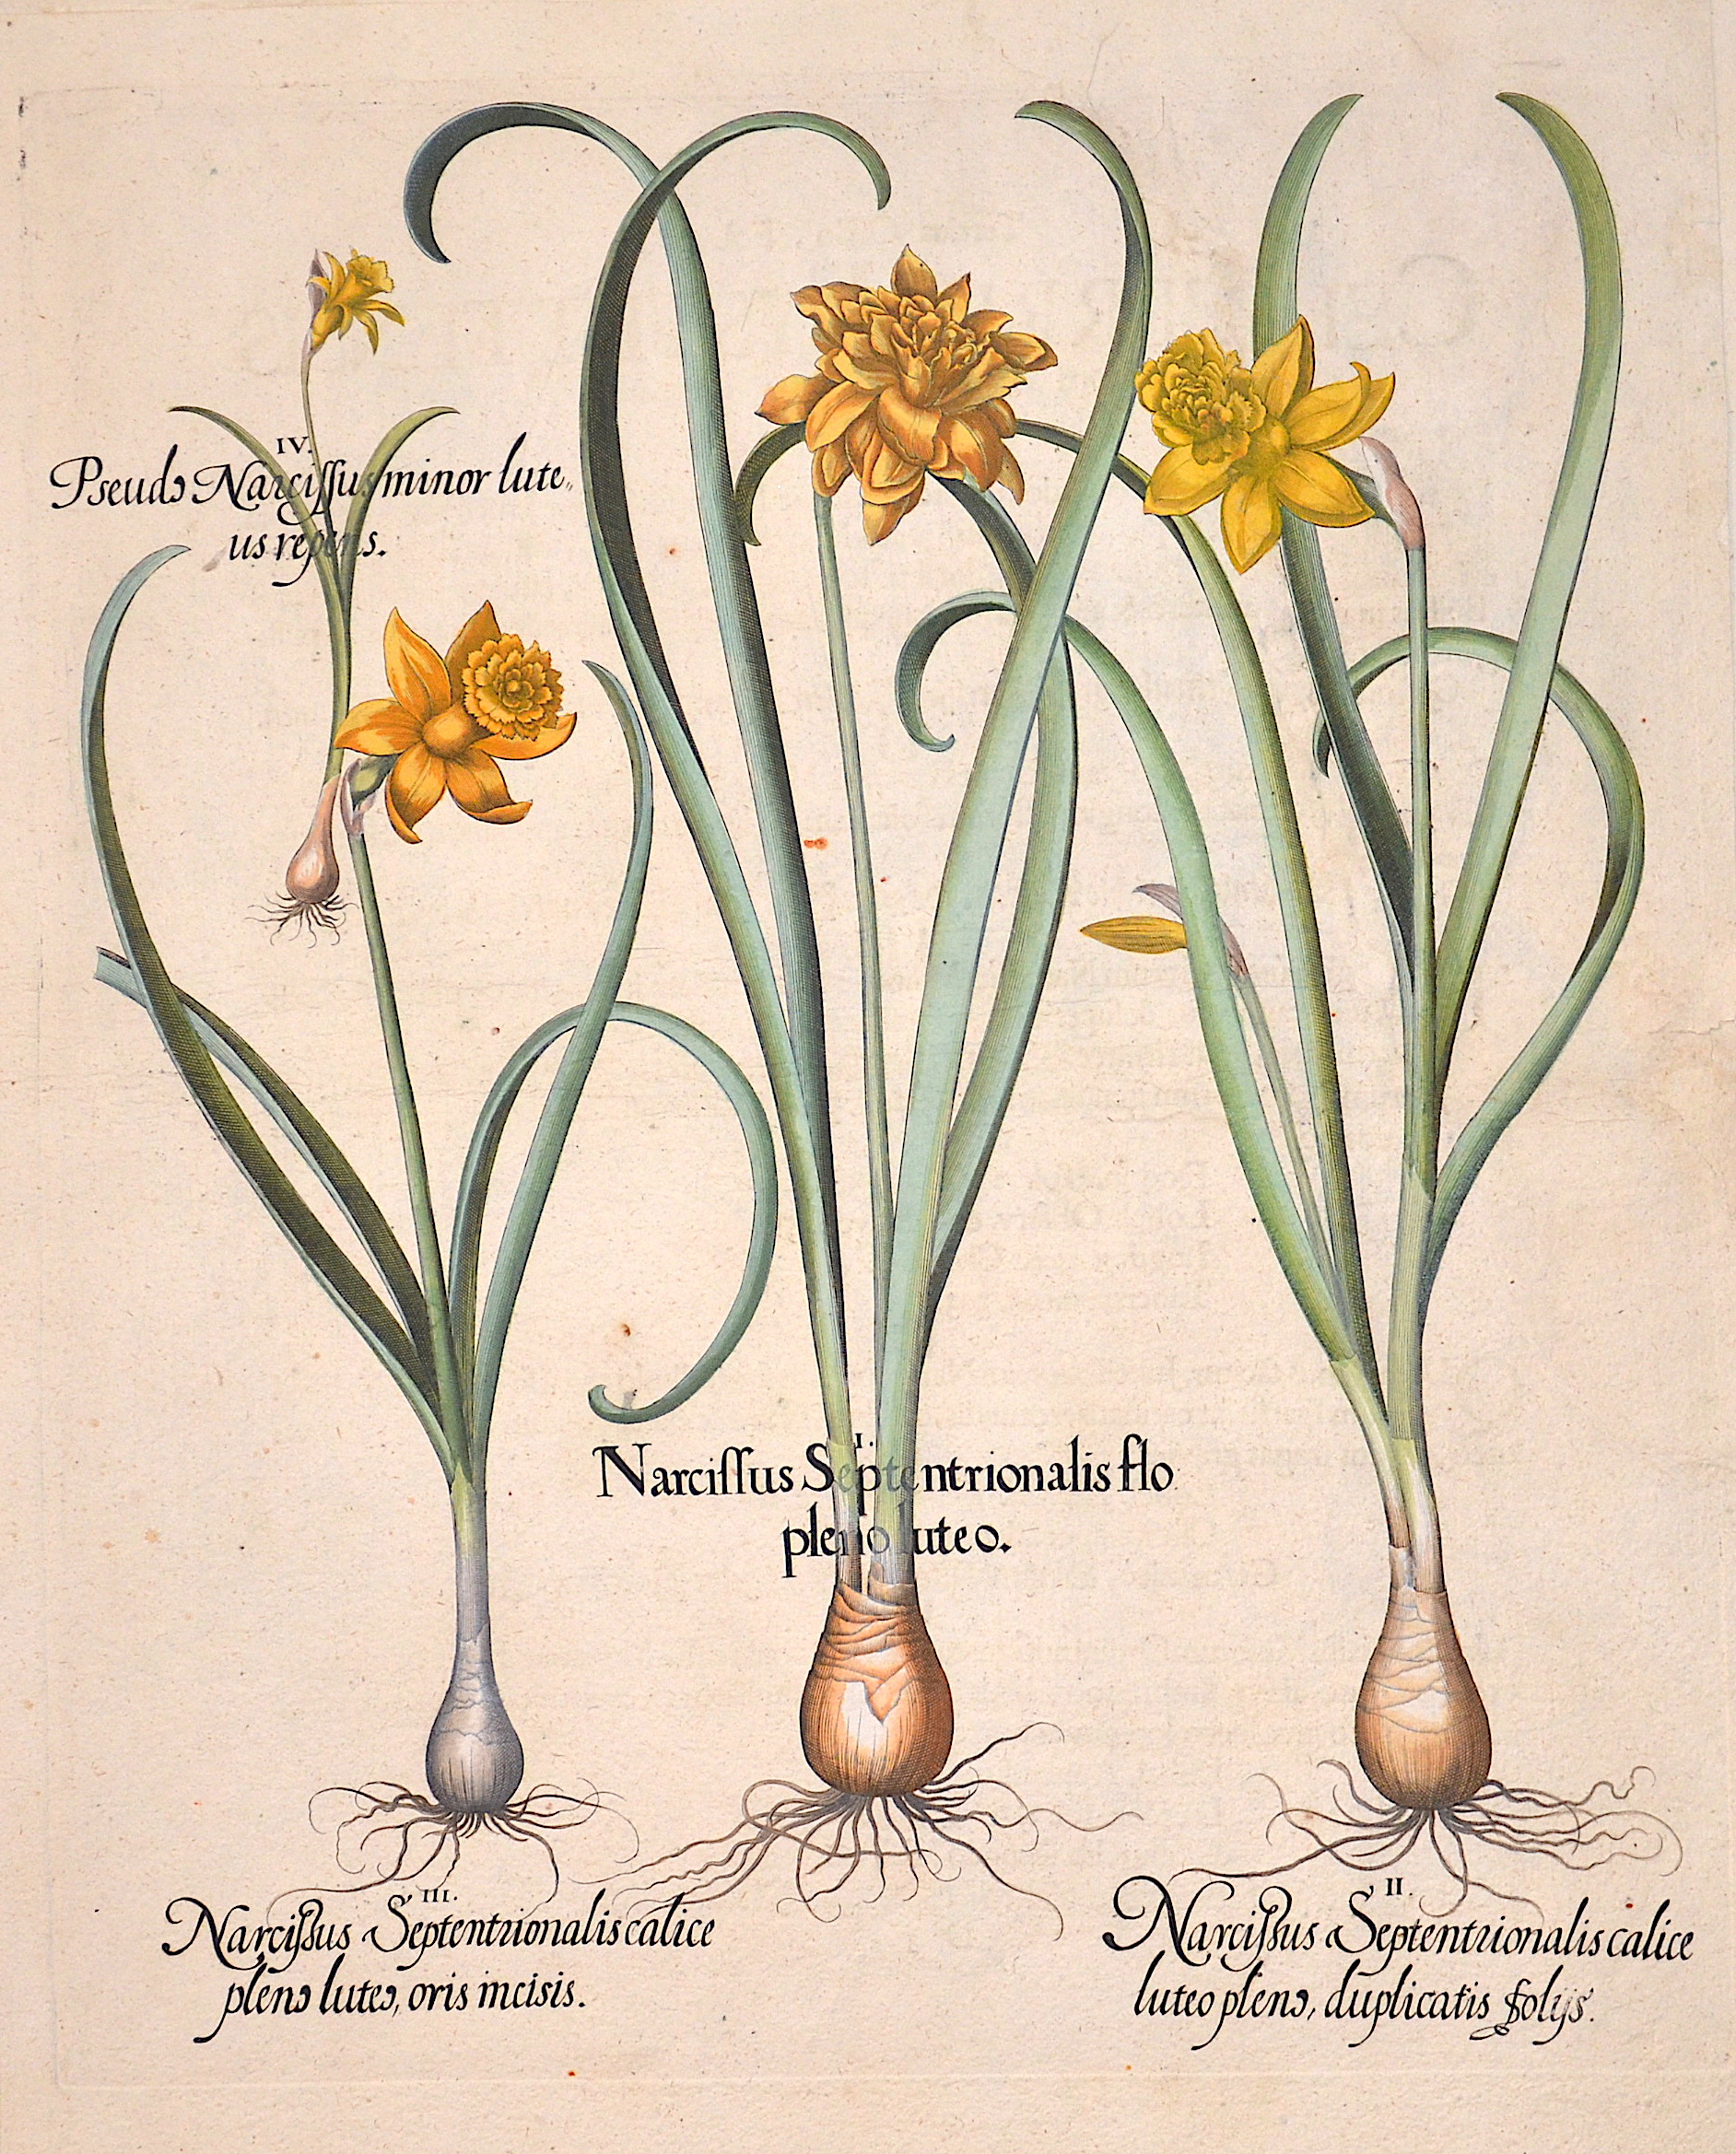 Besler  Narcissus Septentrionalis flo pleno luteo/Narcisus Septentrionalis calice…/Narcissus Septentrionalis calice pleno/Pseudo Narcissus minor luteus repens